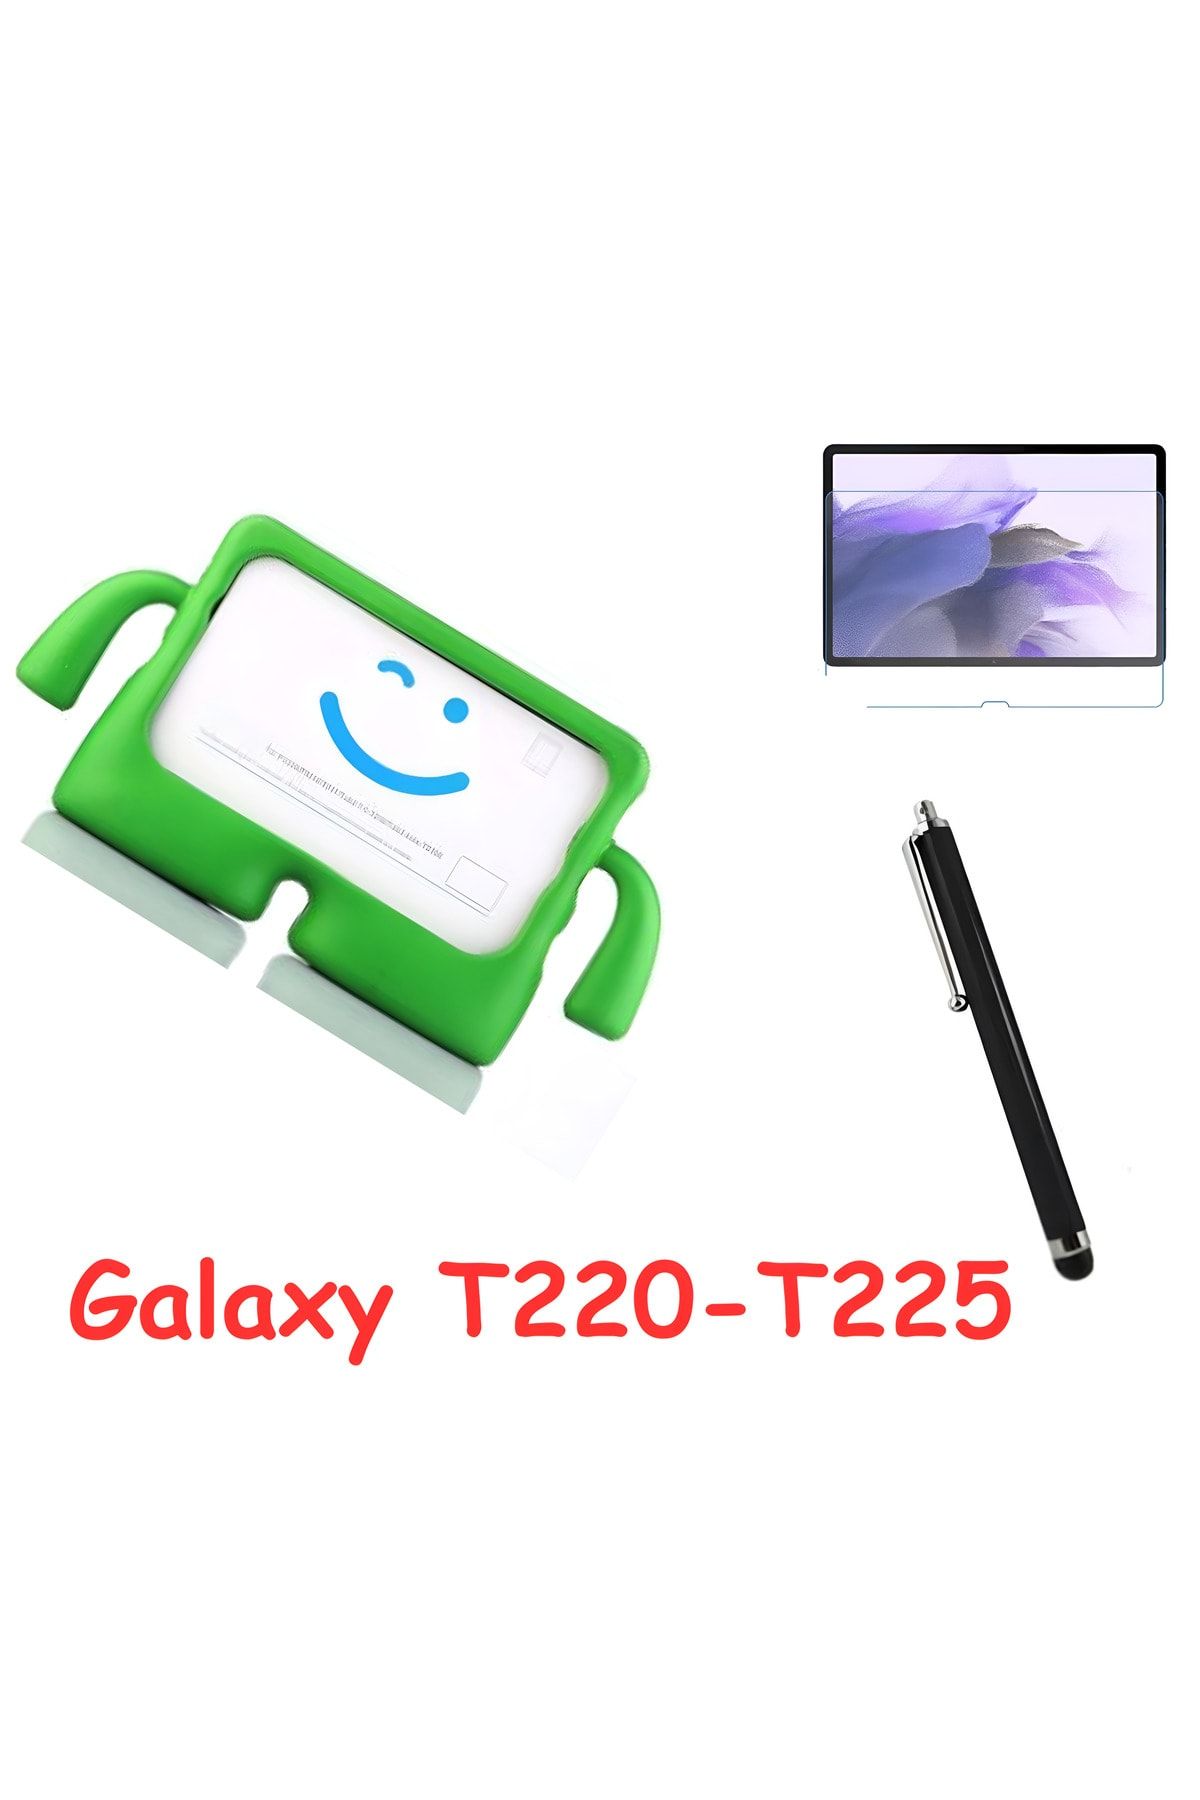 AQUA AKSESUAR Samsung Galaxy Tab A7 Lite T220-t225 Çocuklar Için Figürlü Tablet Kılıfı